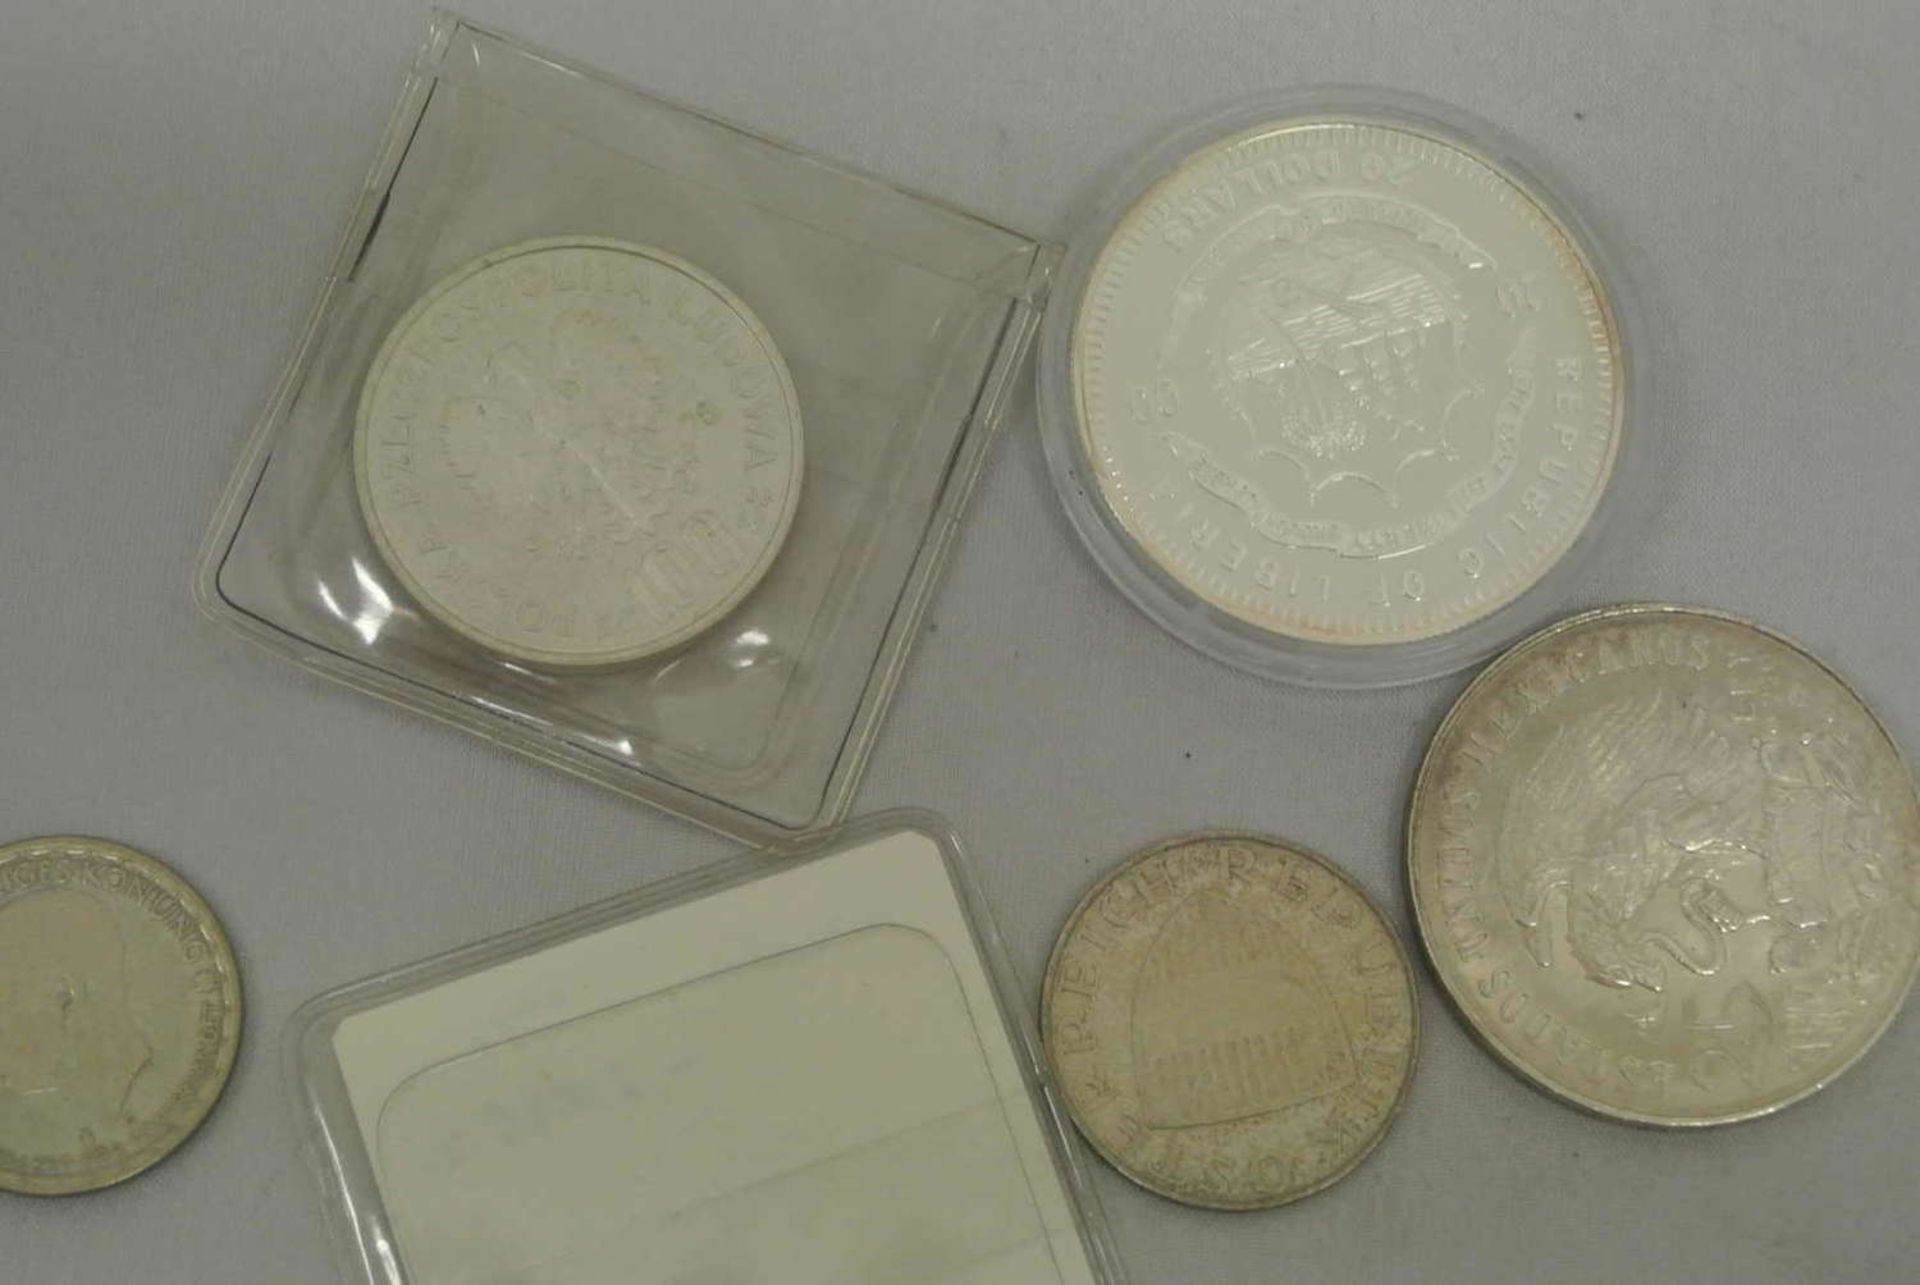 Lot Silbermünzen, insgesamt 6 Stück, Liberia 20 Dollar, Mexiko 25 Pesos, 100 Zloty, etc. Gewicht ca. - Bild 2 aus 2